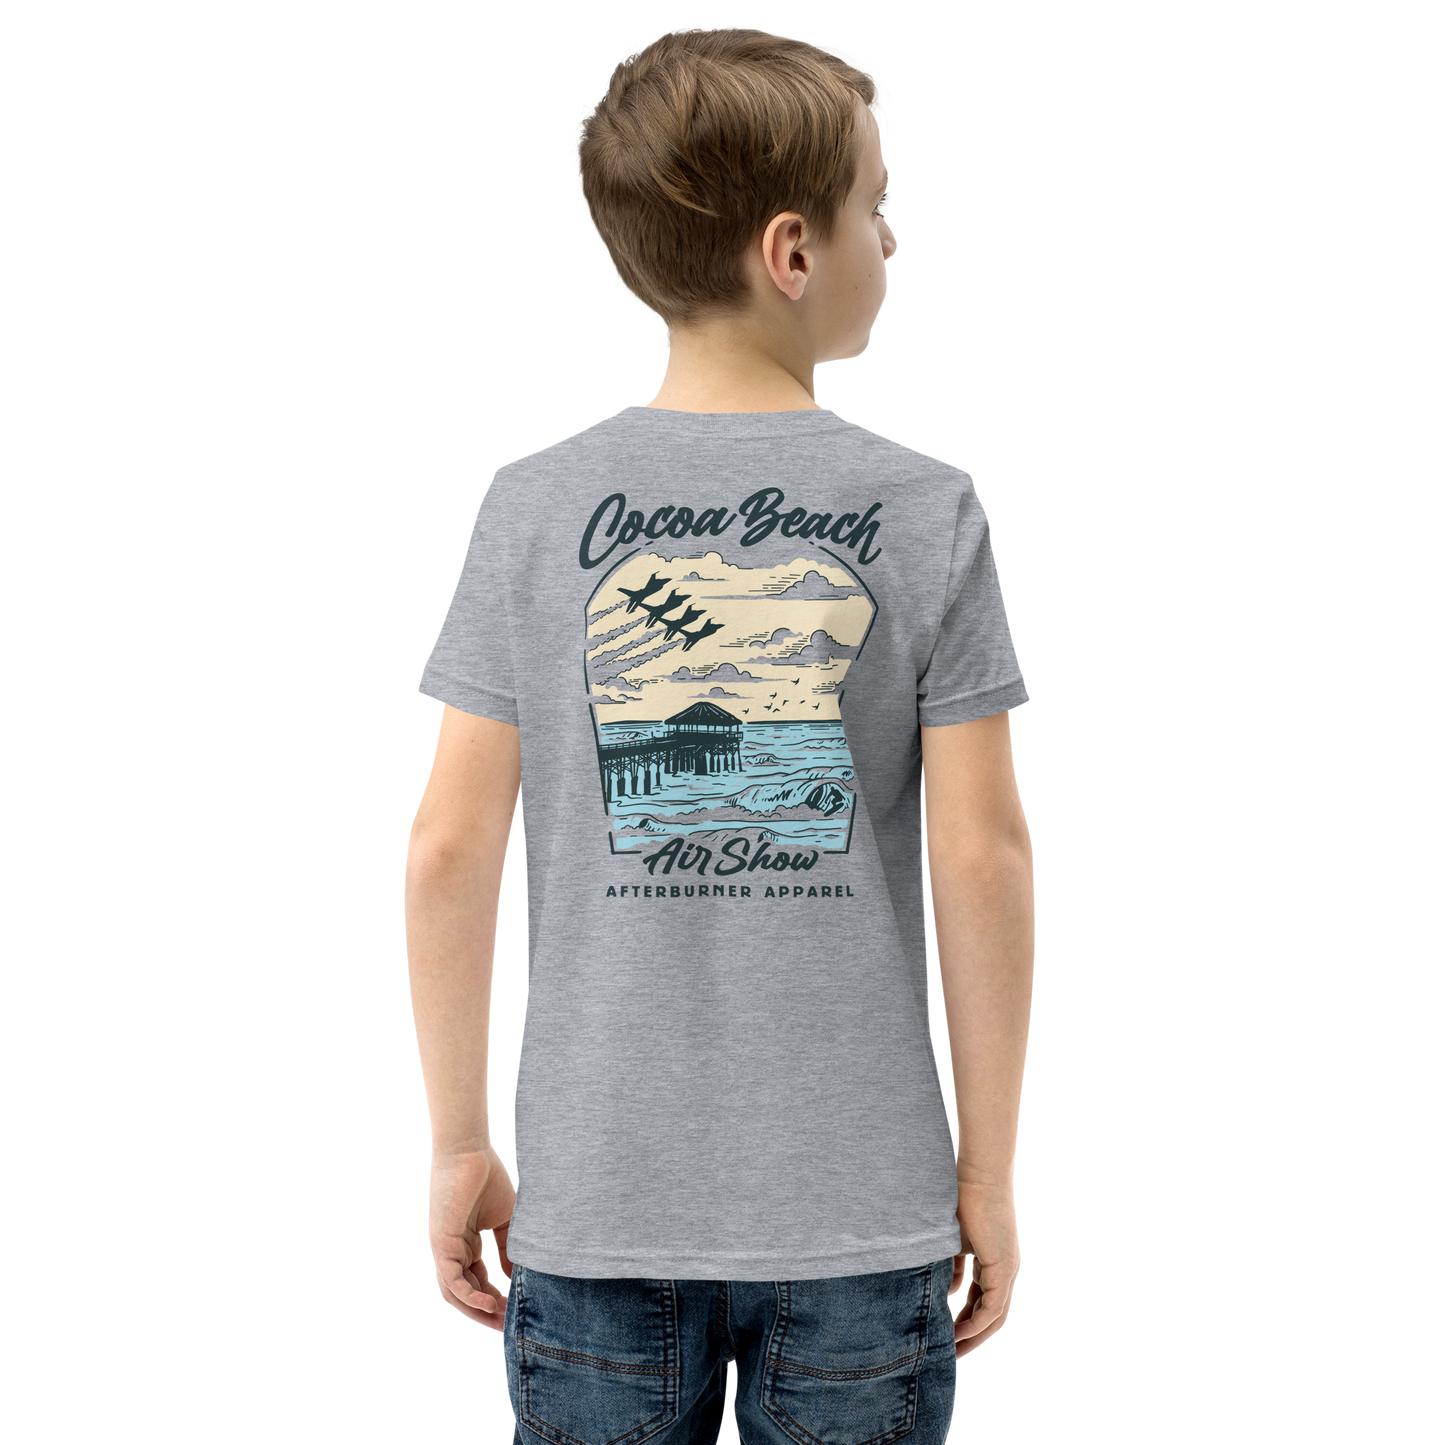 Youth - Cocoa Beach Air Show Shirt - Afterburner Apparel